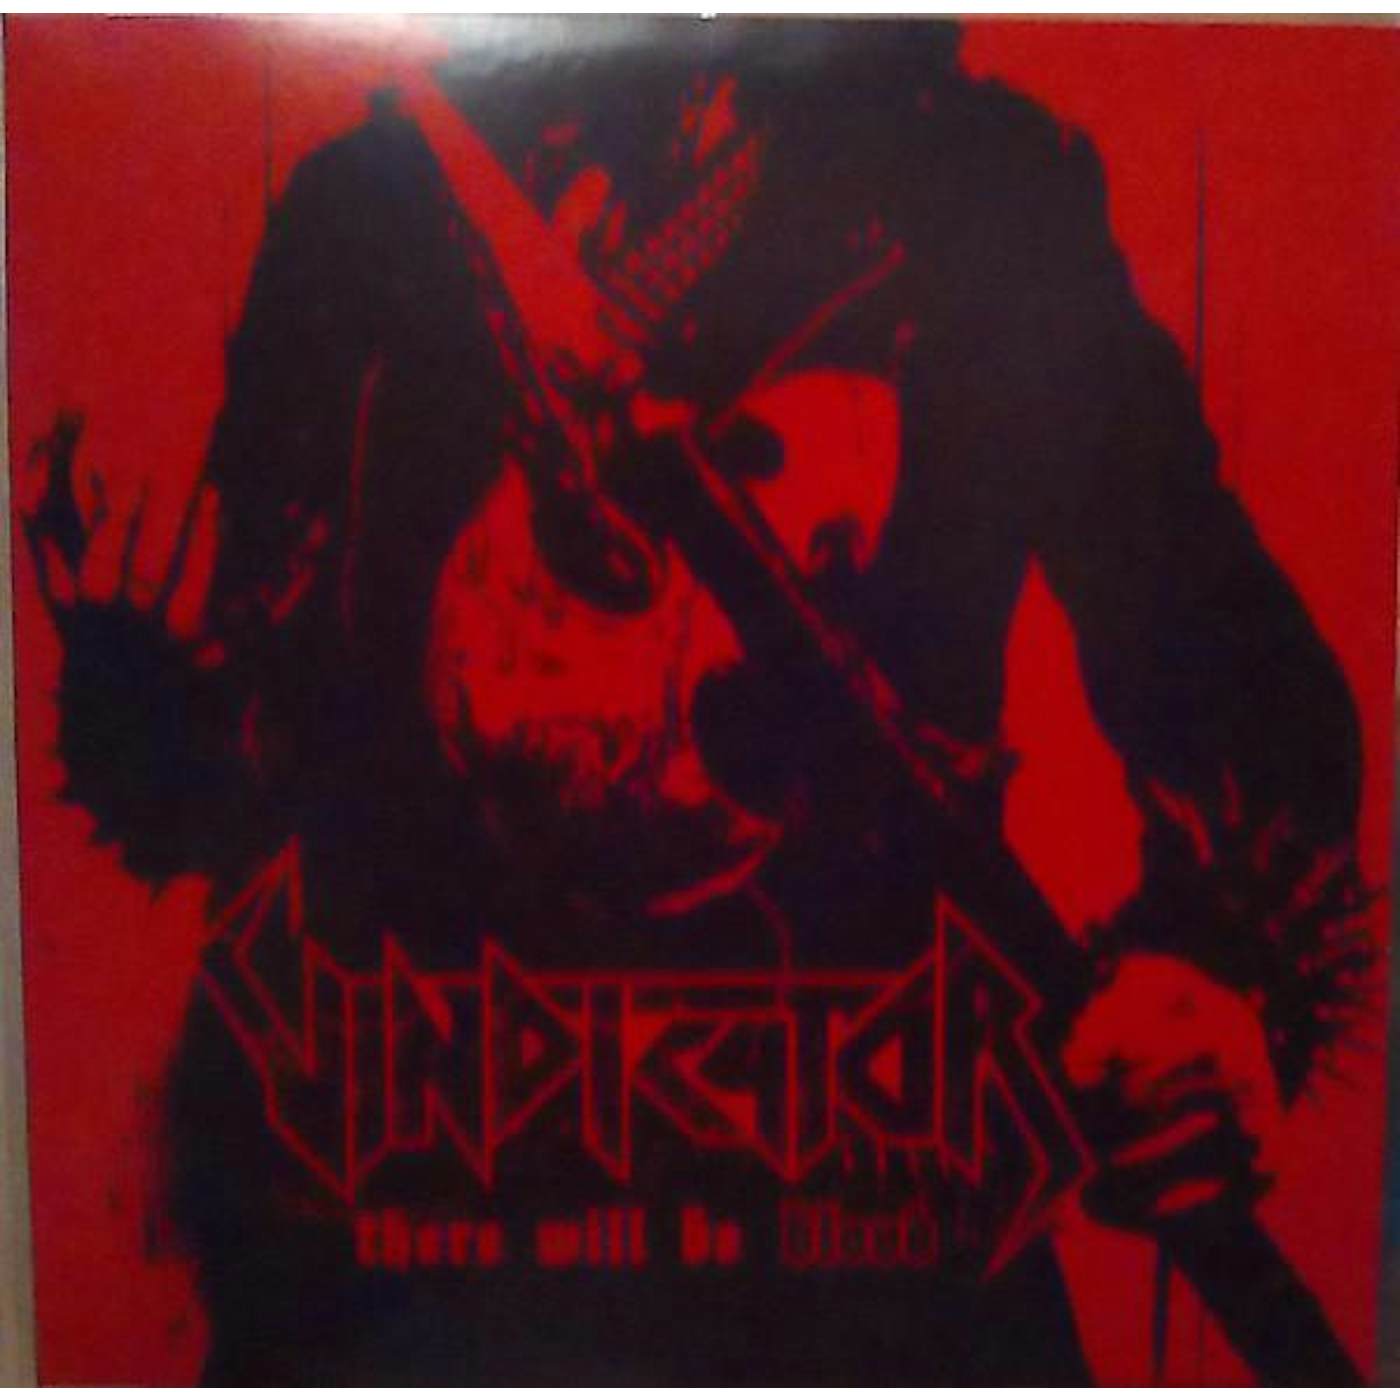 Vindicator There Will Be Blood (White/Red Splatter) Vinyl Record